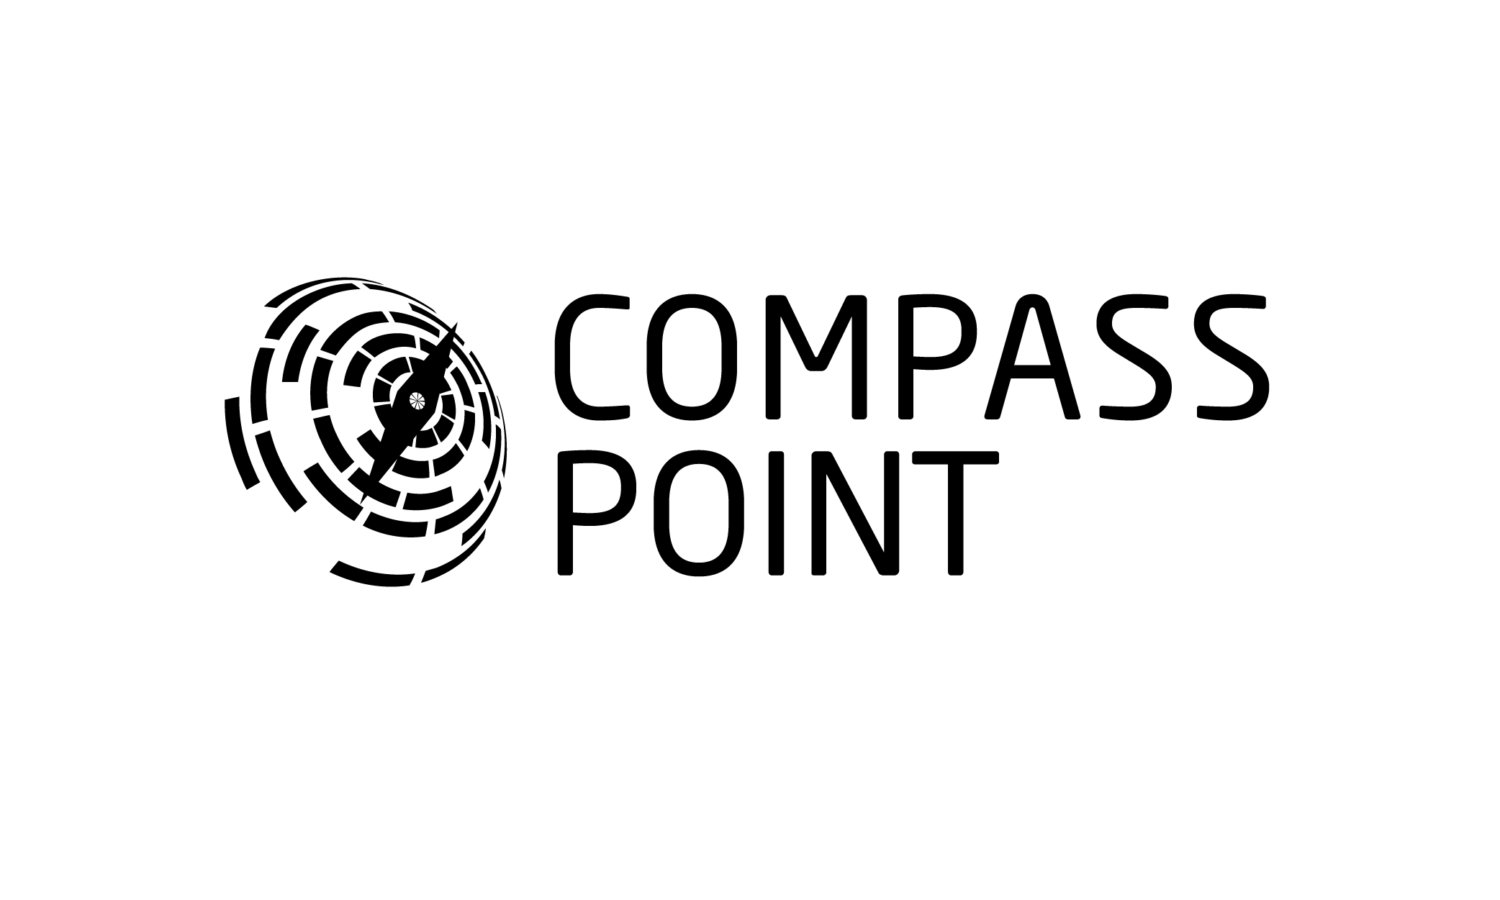 Compass Point logo